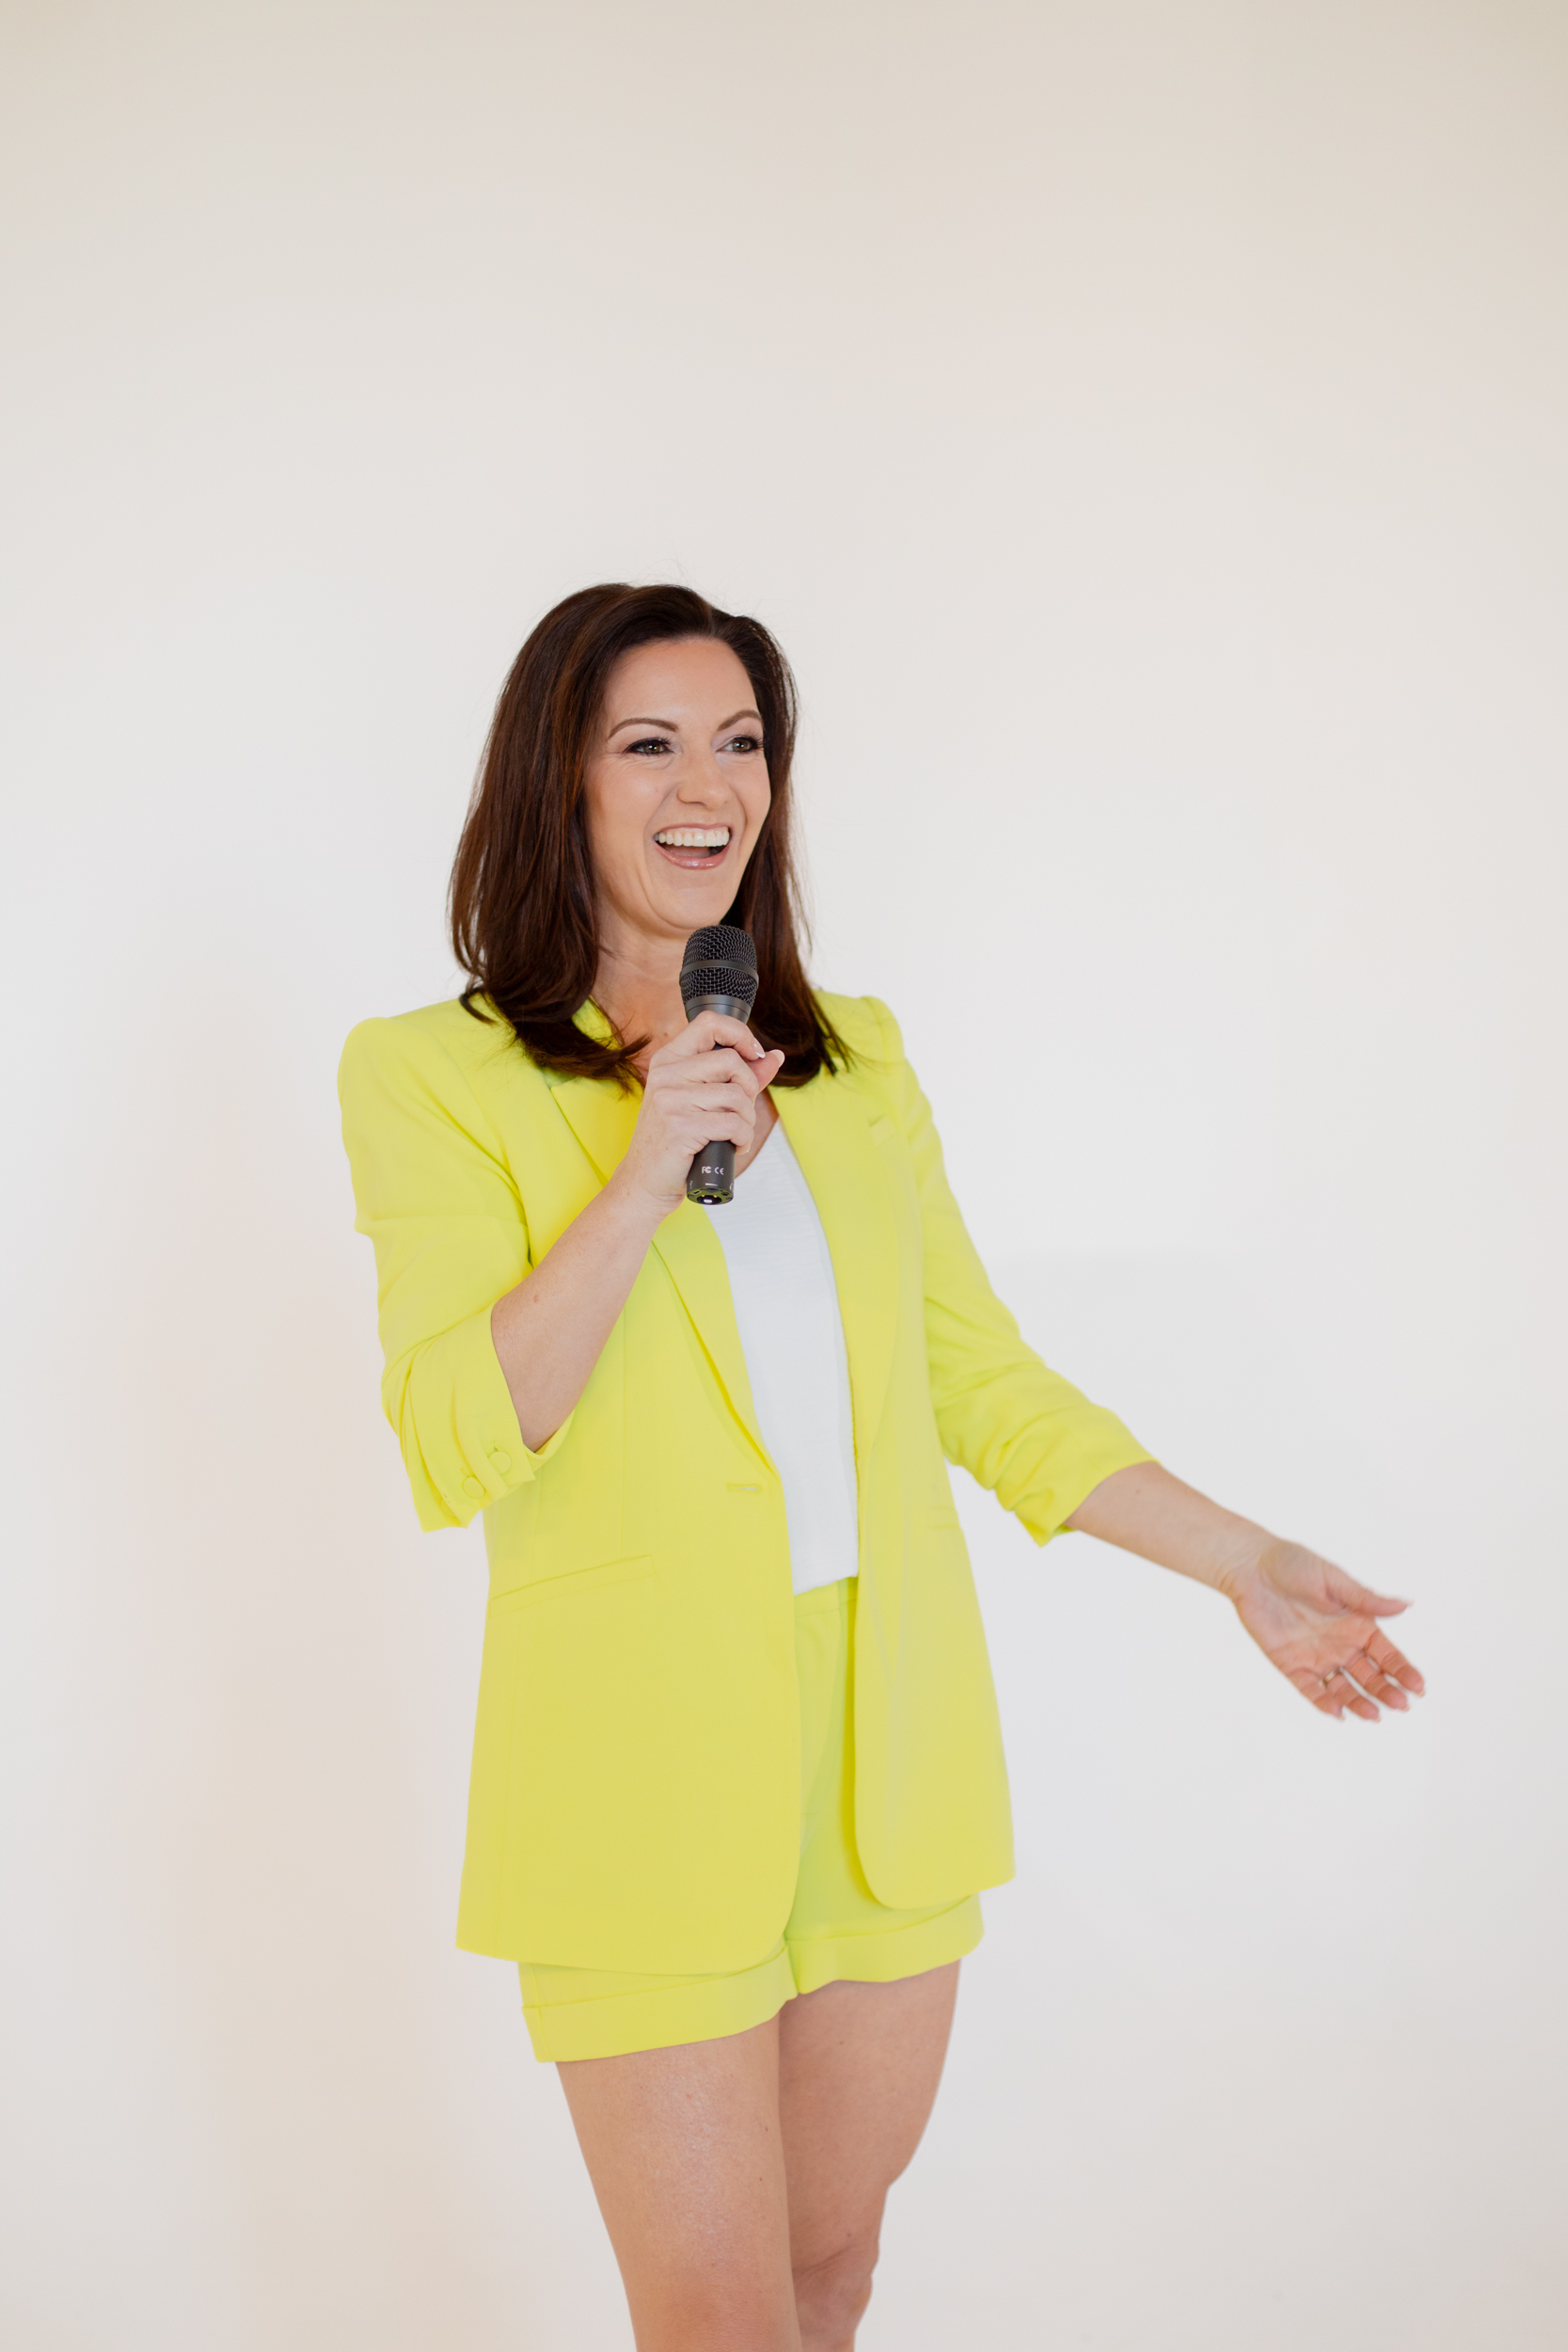 Neeley Neal - female podcast host and motivational speaker